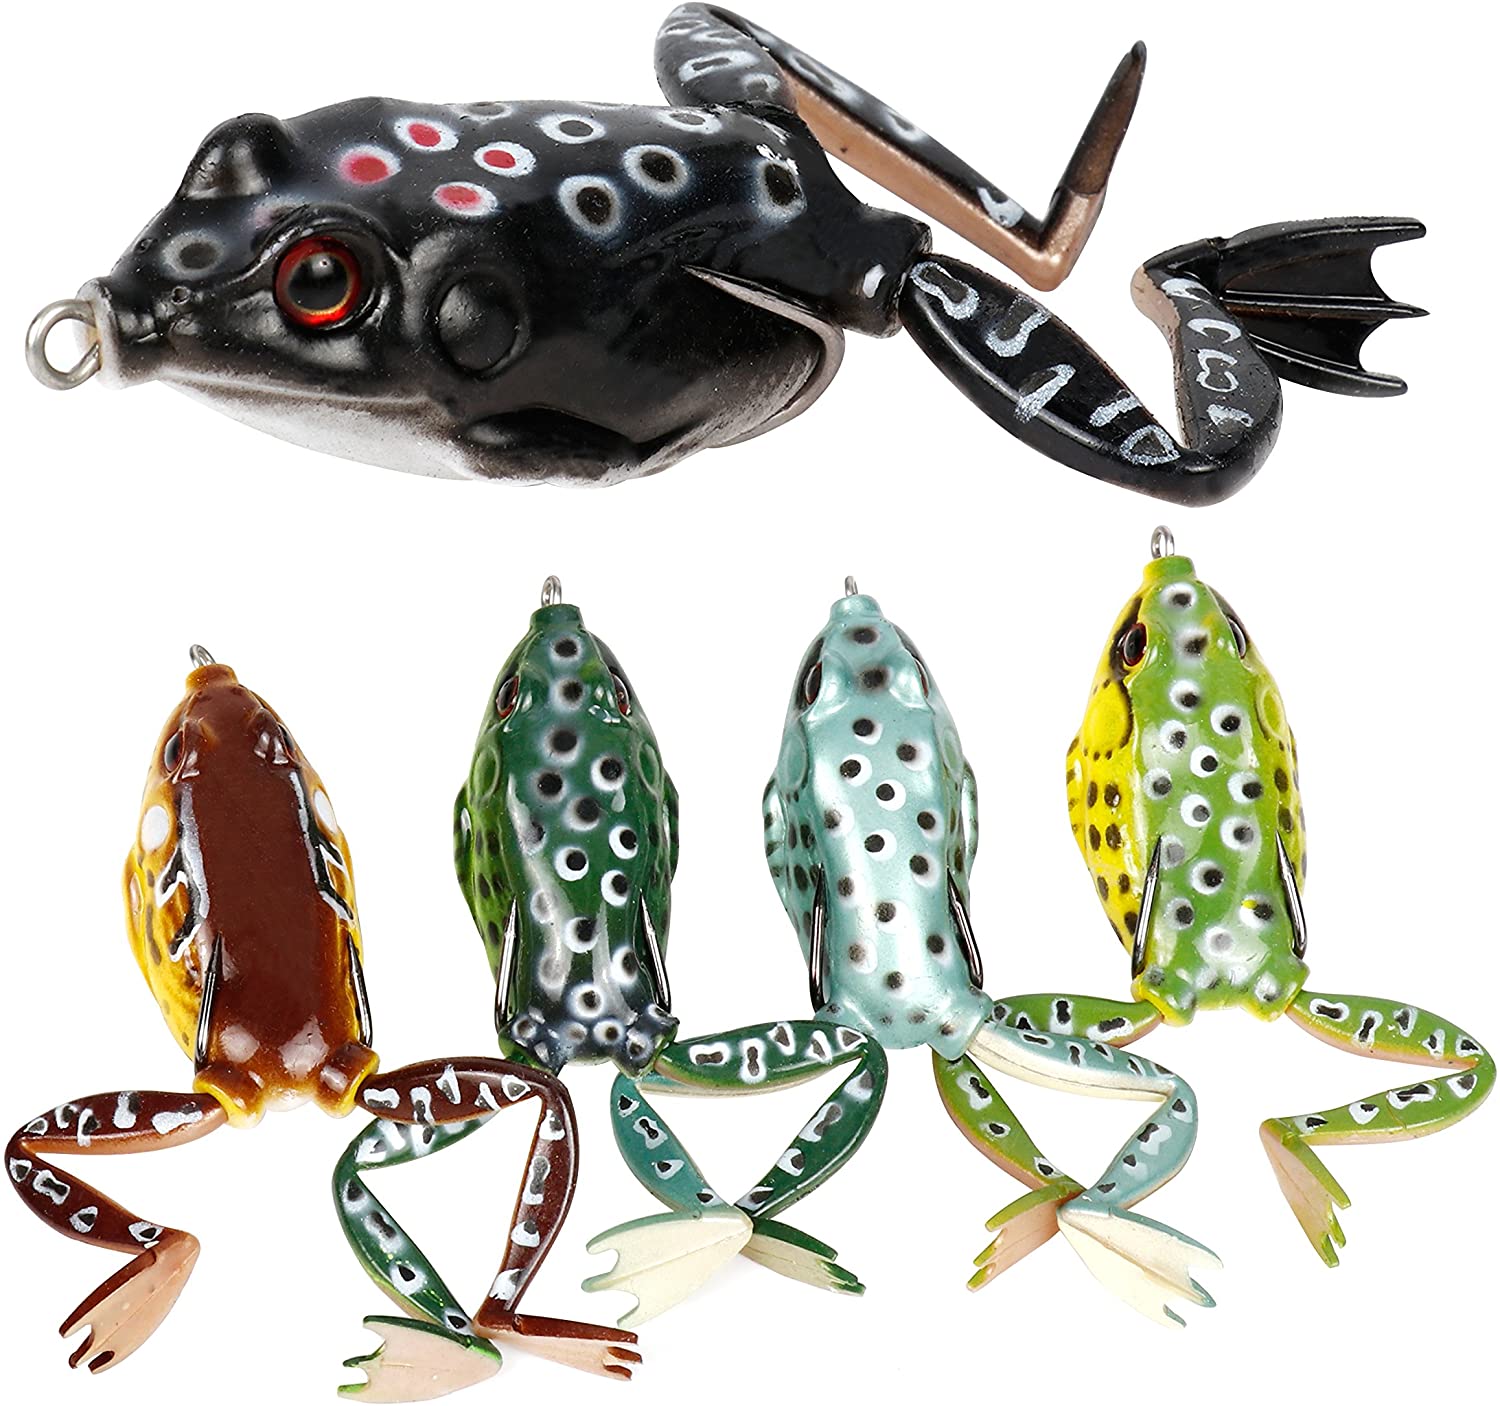 Re: BFS fishing and Swimbaits? – Frog Fishing Lure